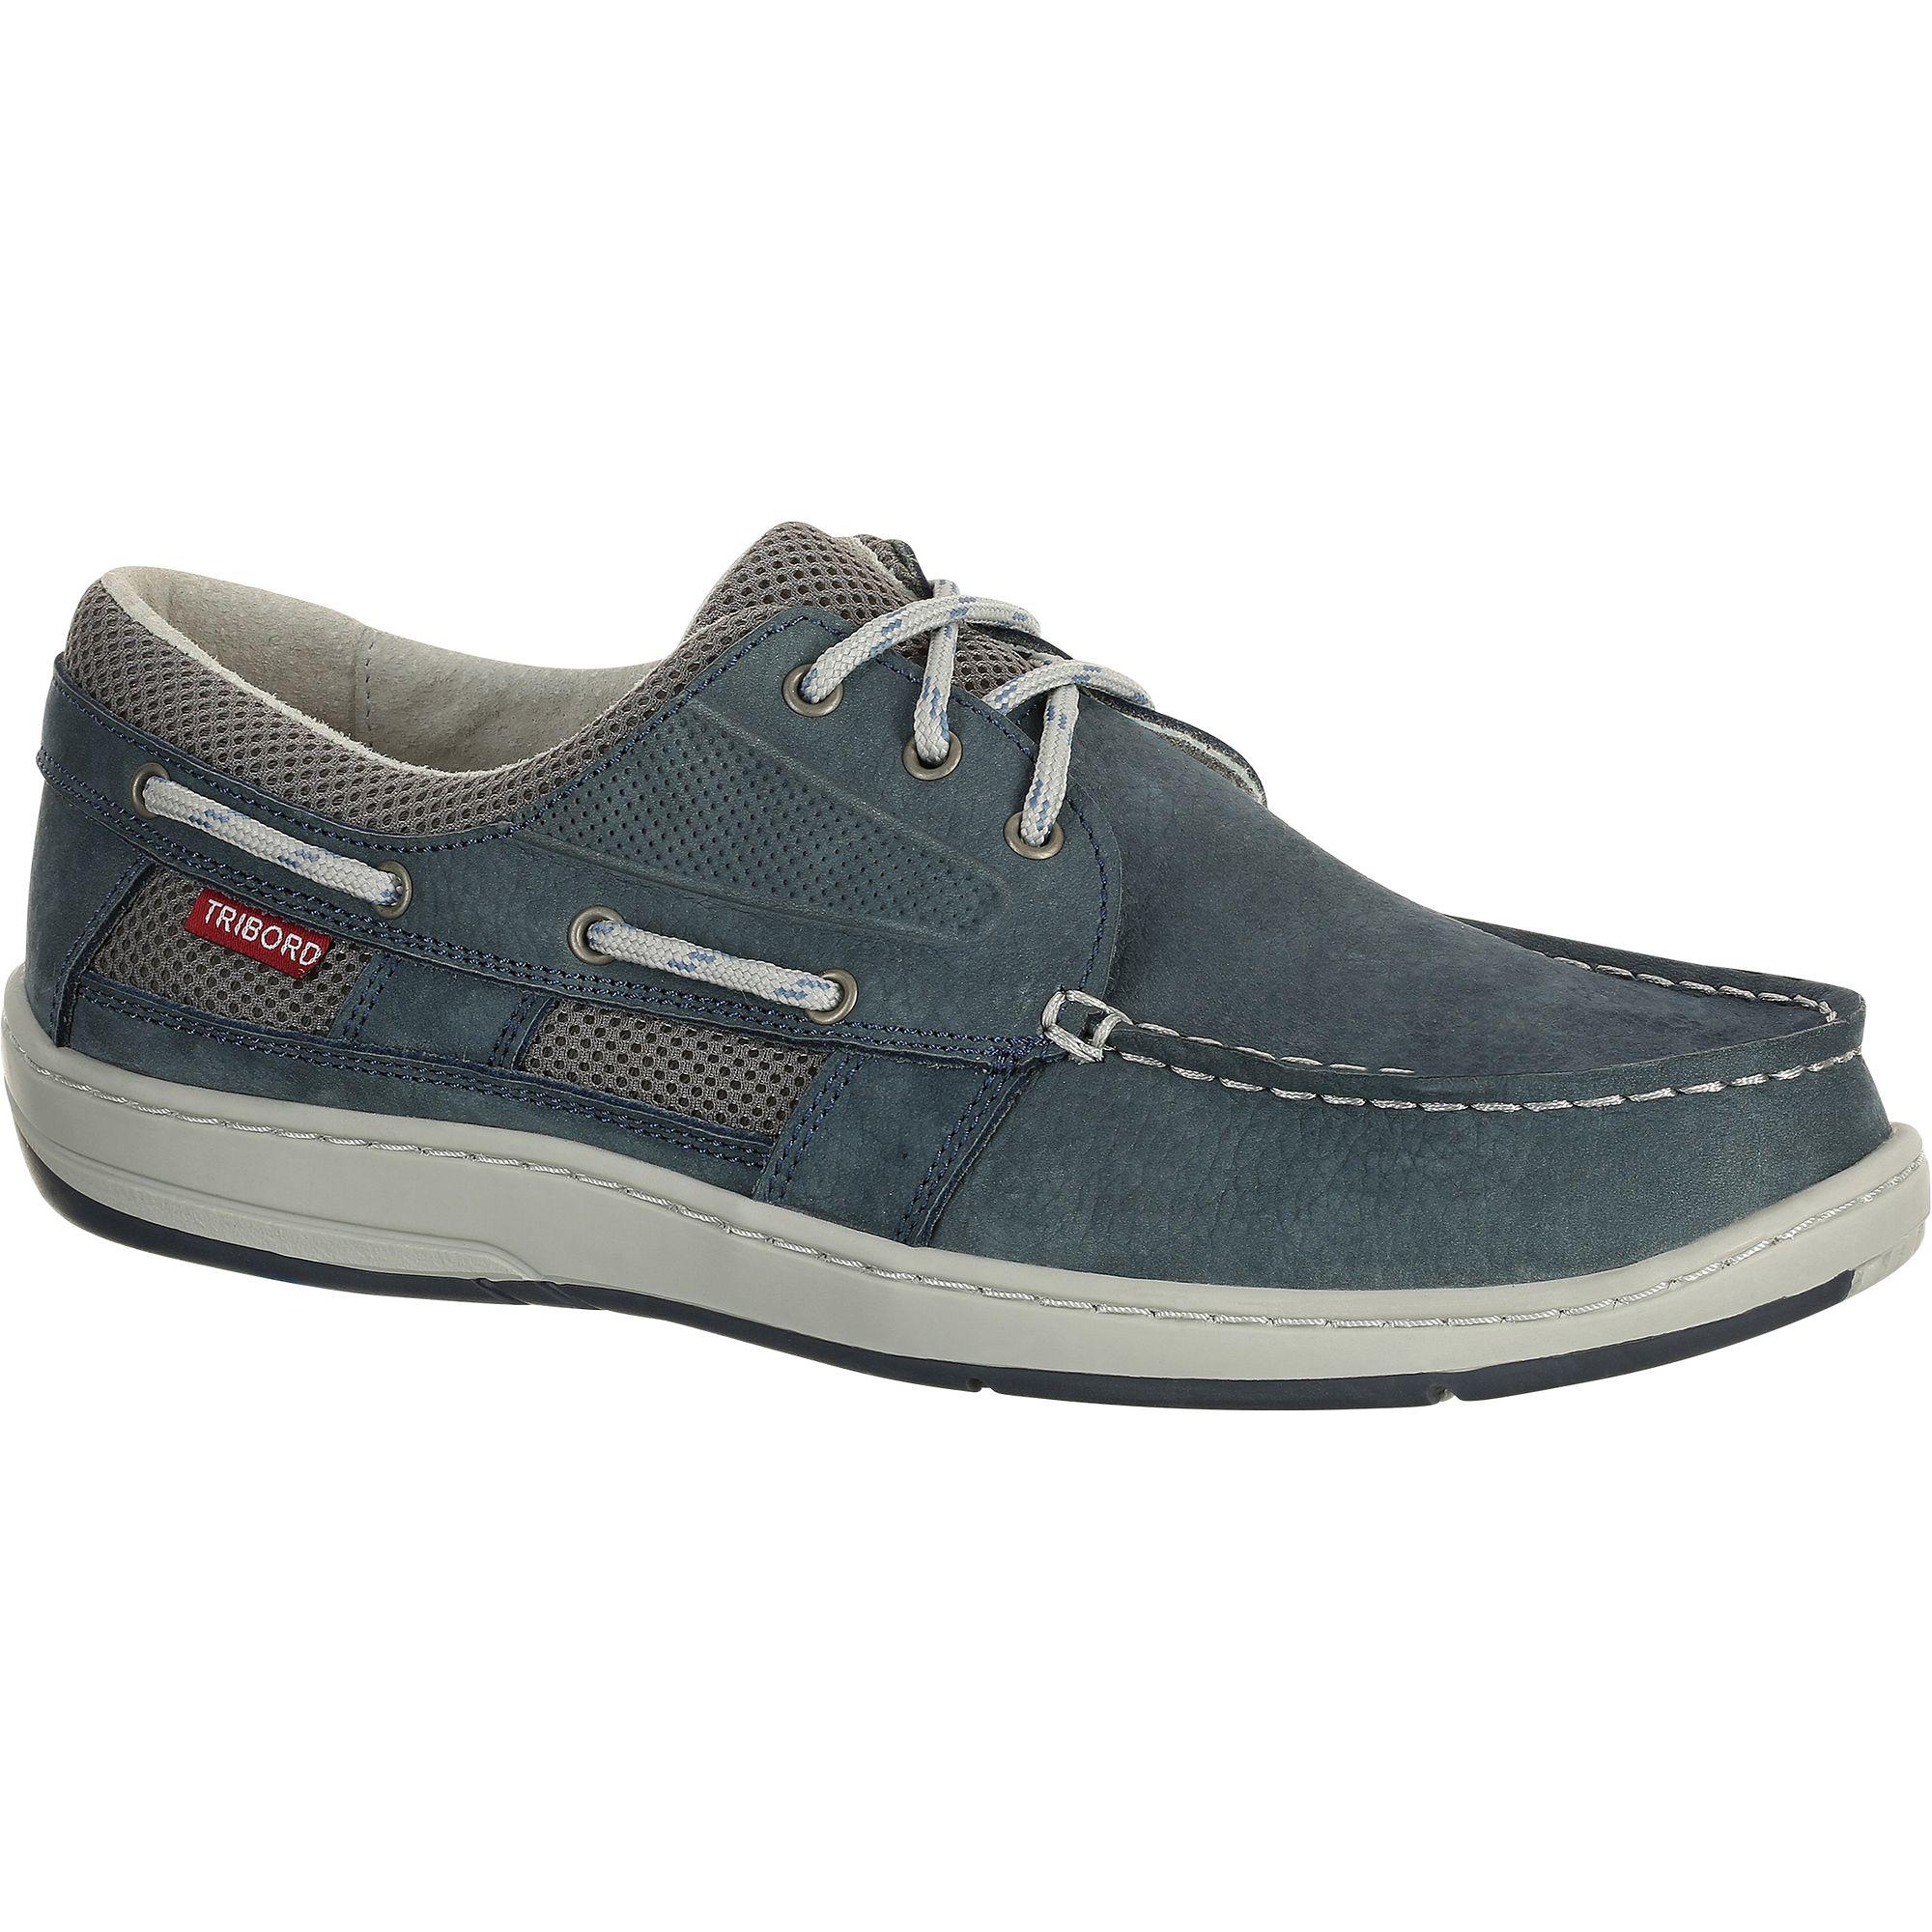 TRIBORD CLIPPER men's boat shoes - denim blue